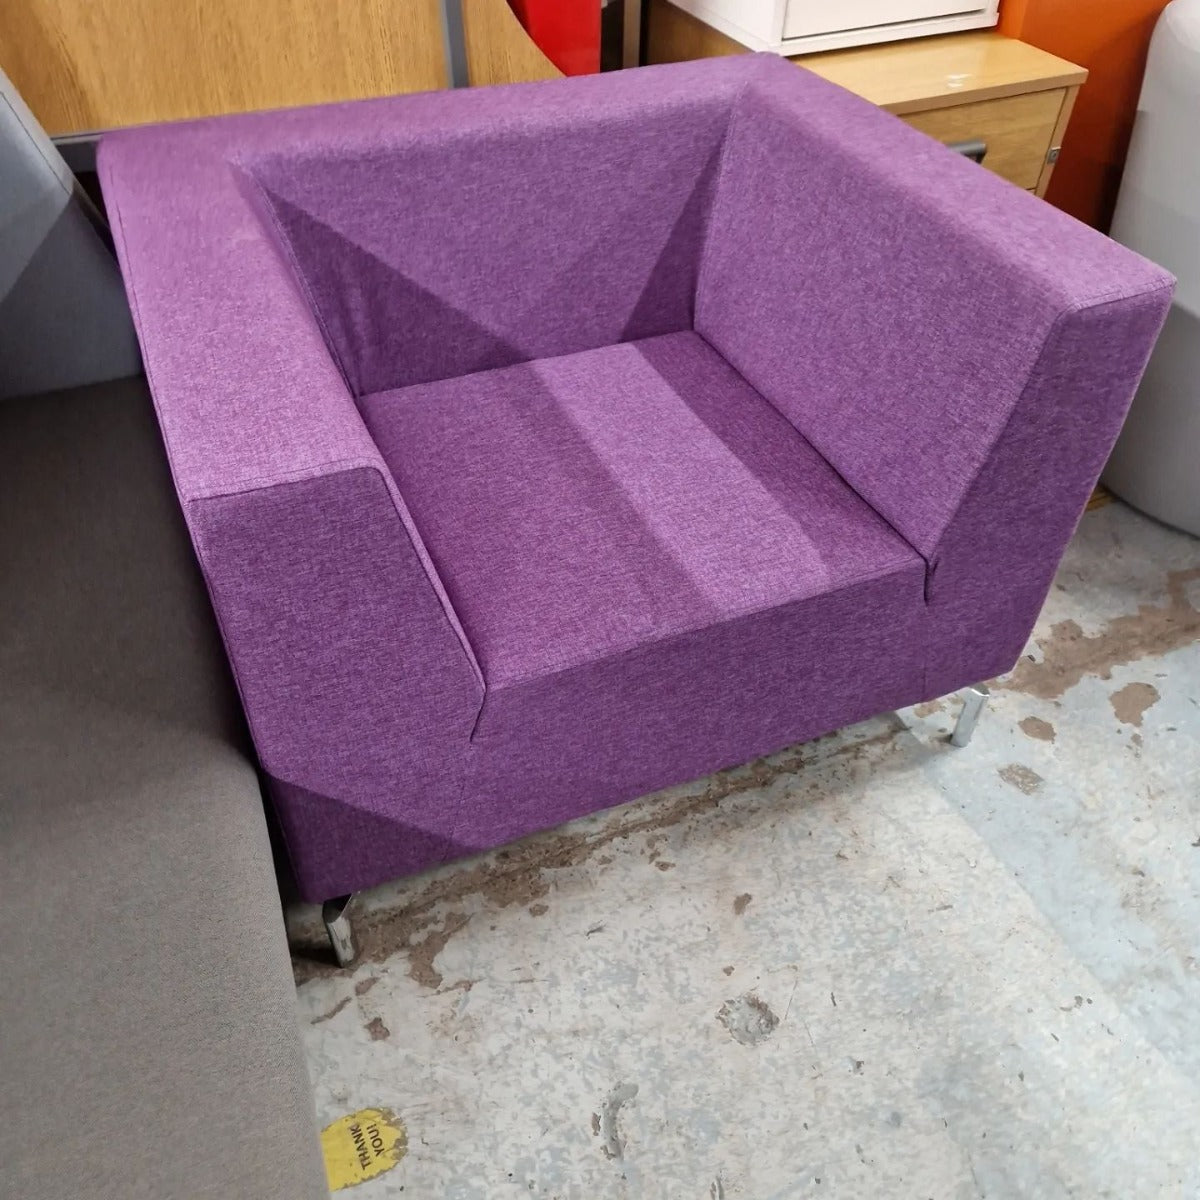 Alban purple seat